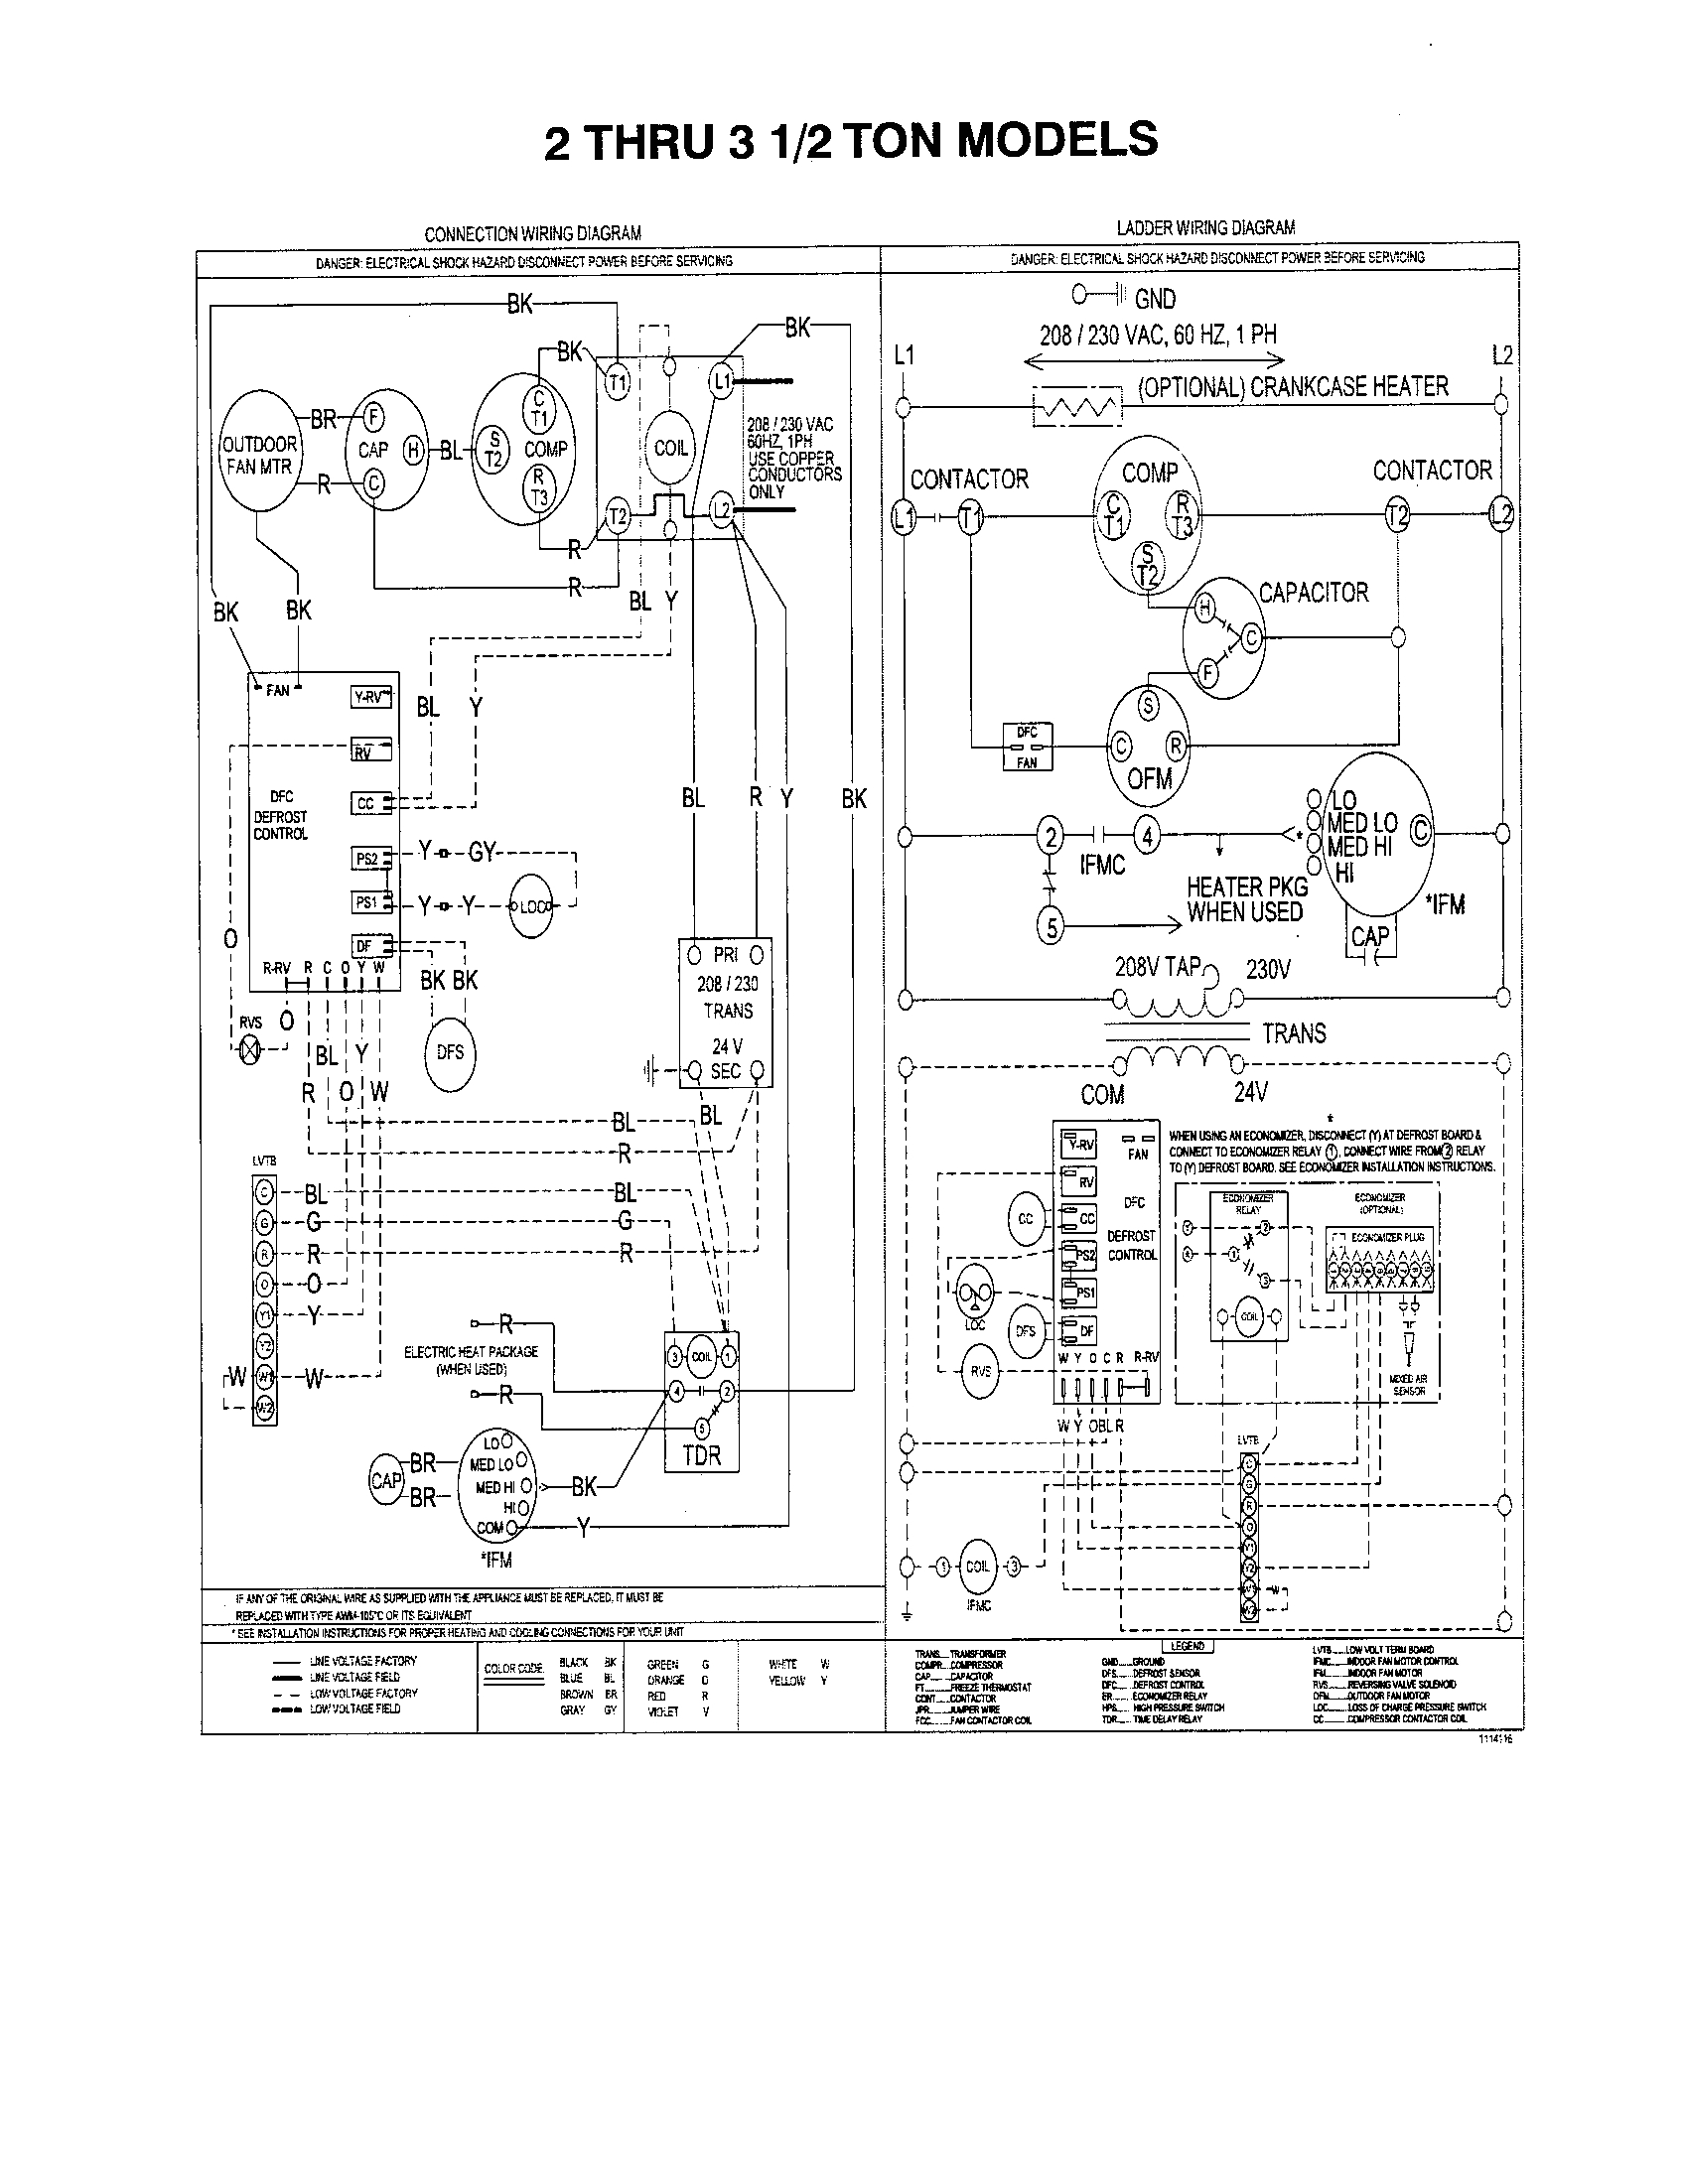 york rtu wiring diagrams wiring diagram inside york diagrams wiring diagram york furnace schematic schema wiring